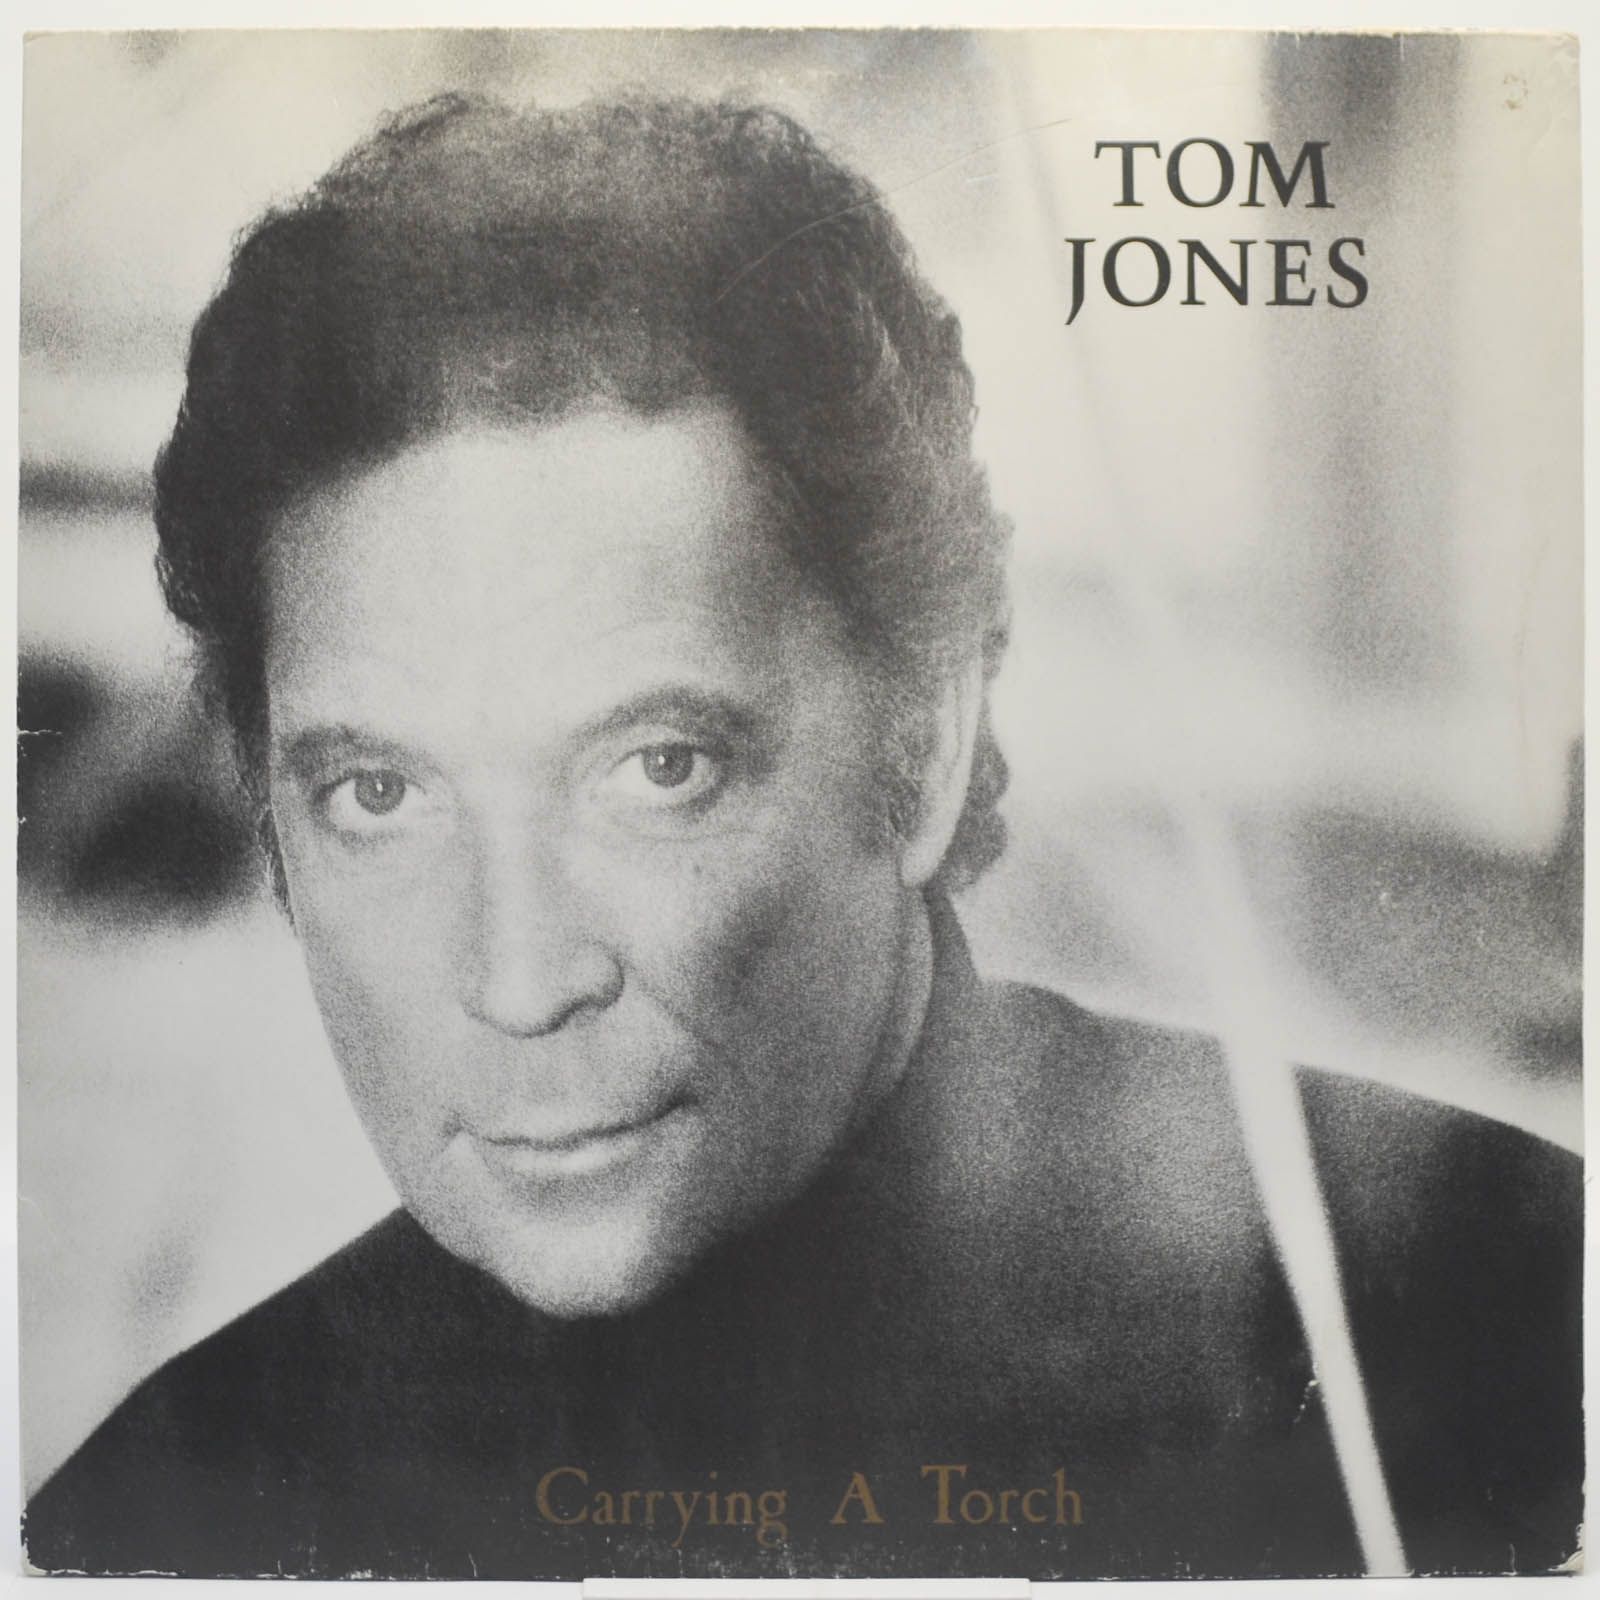 Tom Jones — Carrying A Torch, 1991